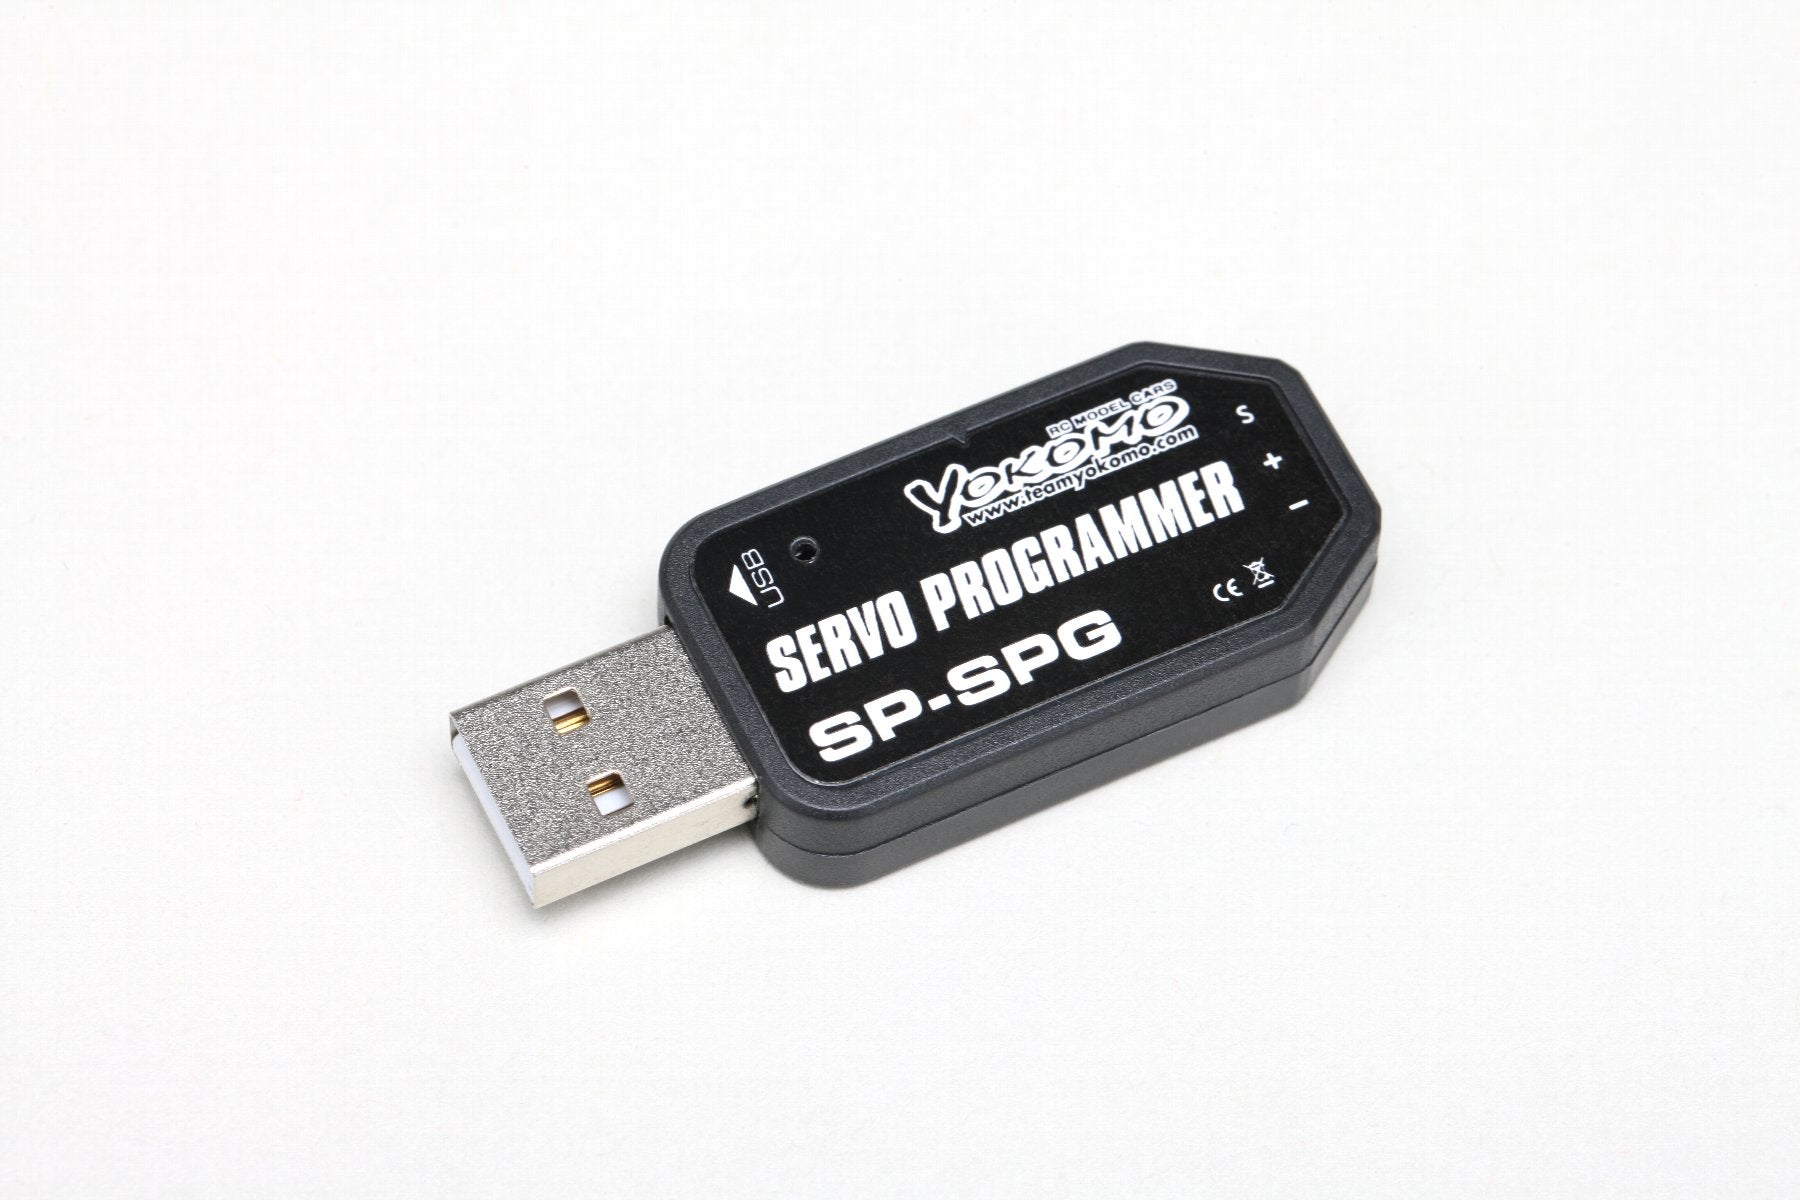 SP-USBP USB Program Adapter for SP-02D / SP-03D